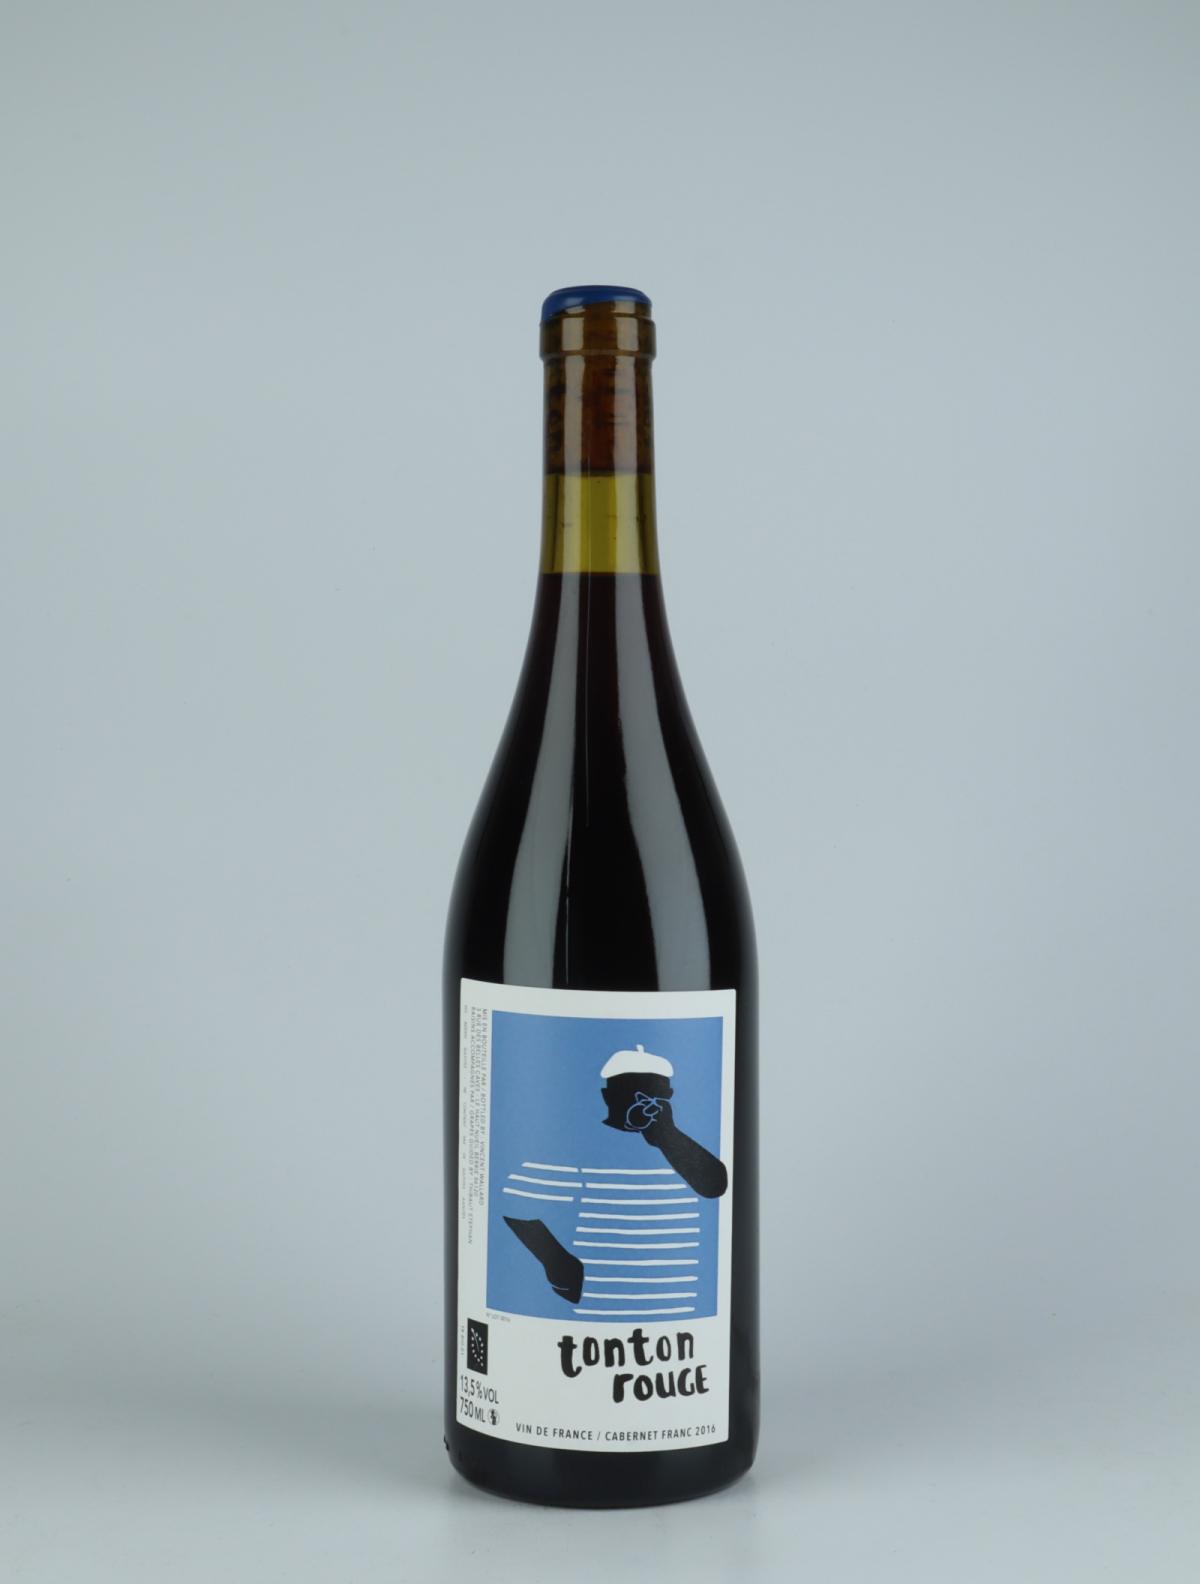 A bottle 2016 Tonton Rouge Red wine from Vincent Wallard, Loire in France